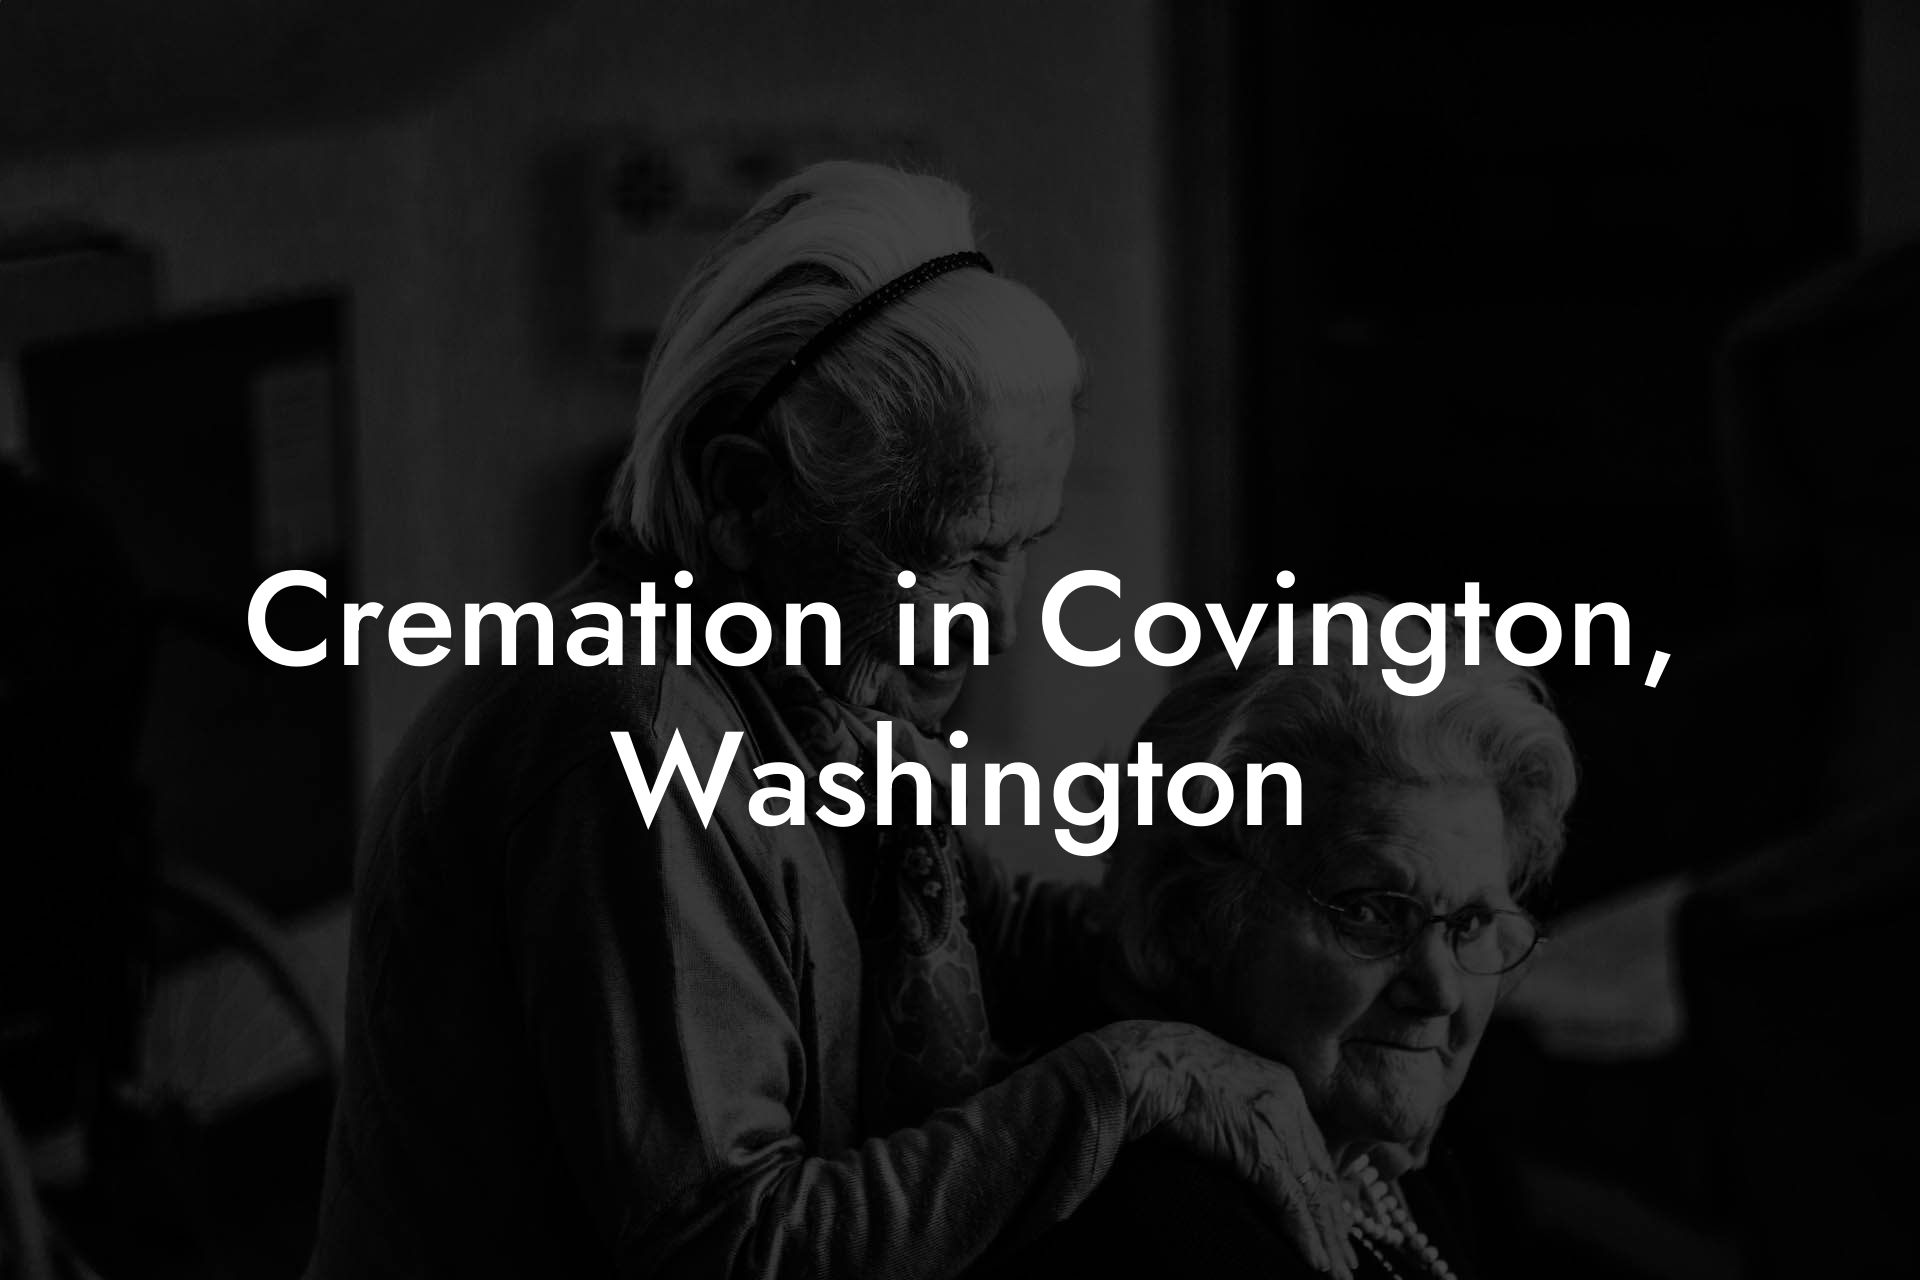 Cremation in Covington, Washington